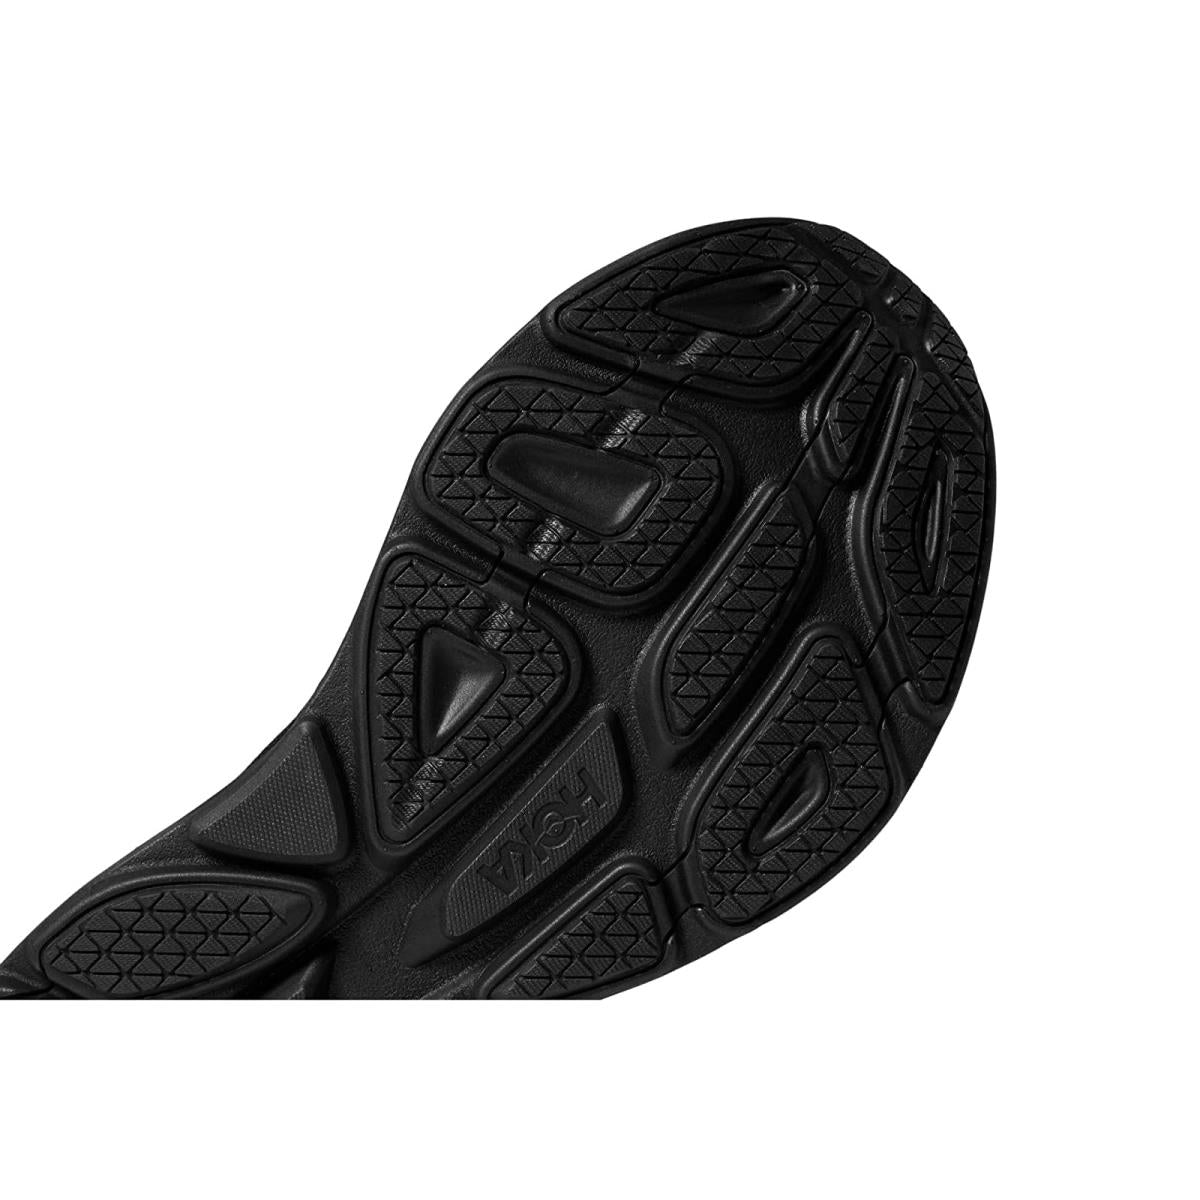 Hoka Bondi 8 Men's (Wide) Everyday Running Shoe - Black / Black - Size 11.5EE